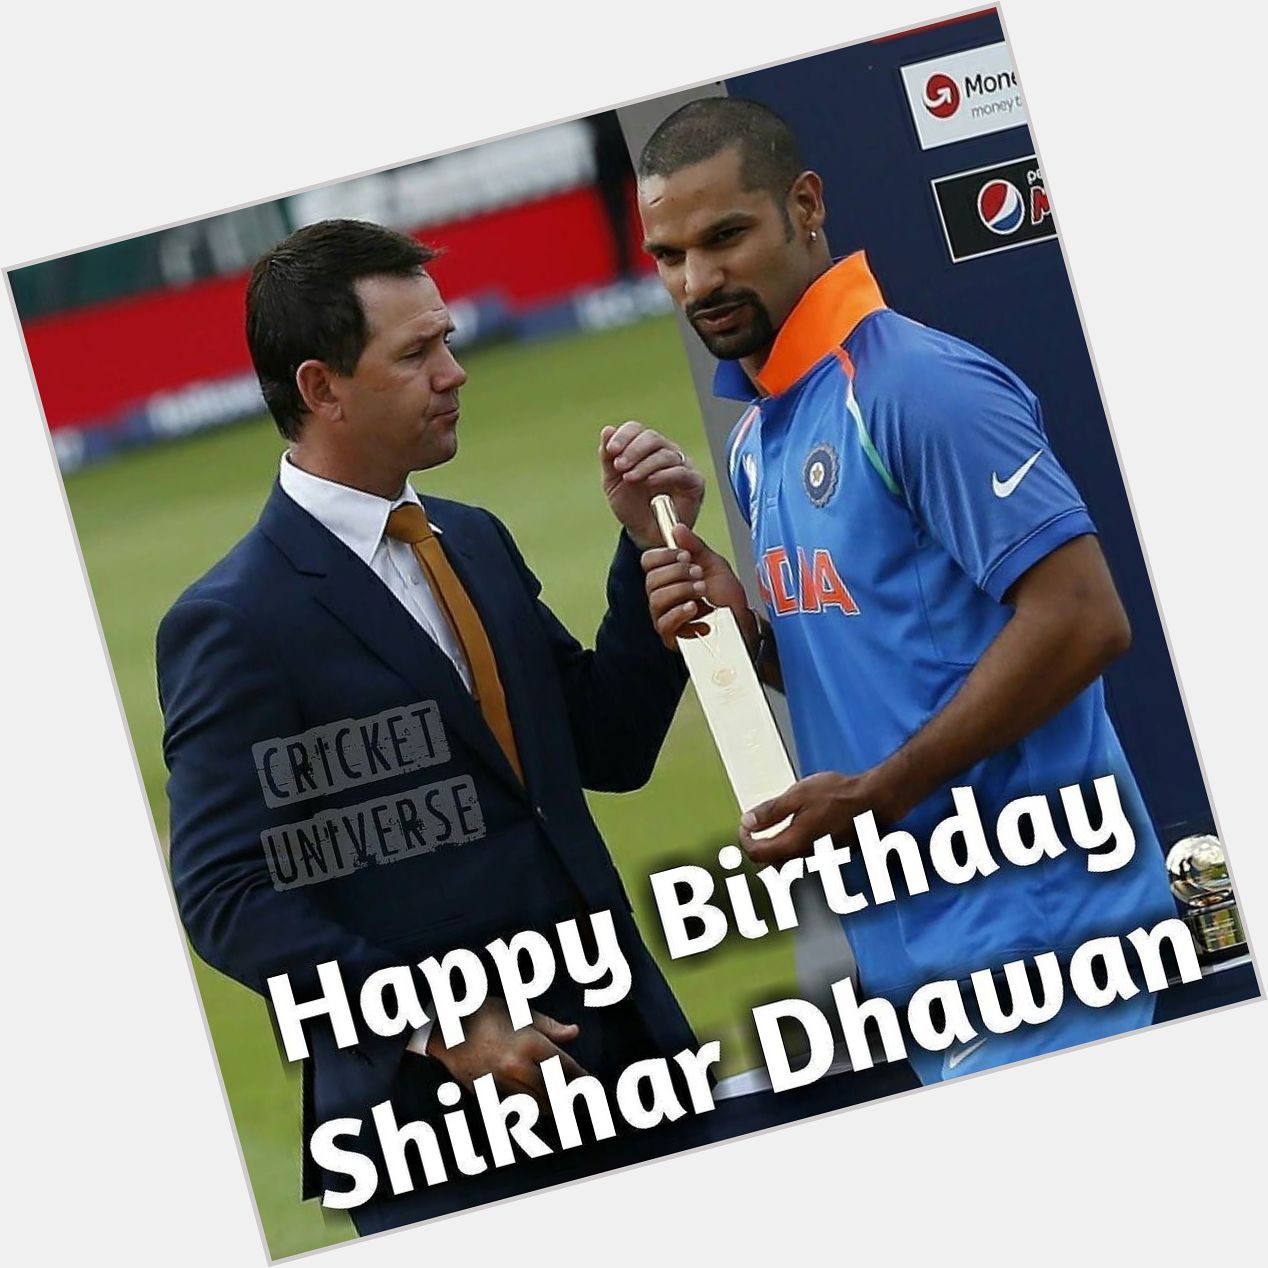 Wishing Shikhar Dhawan a Very Happy Birthday! 